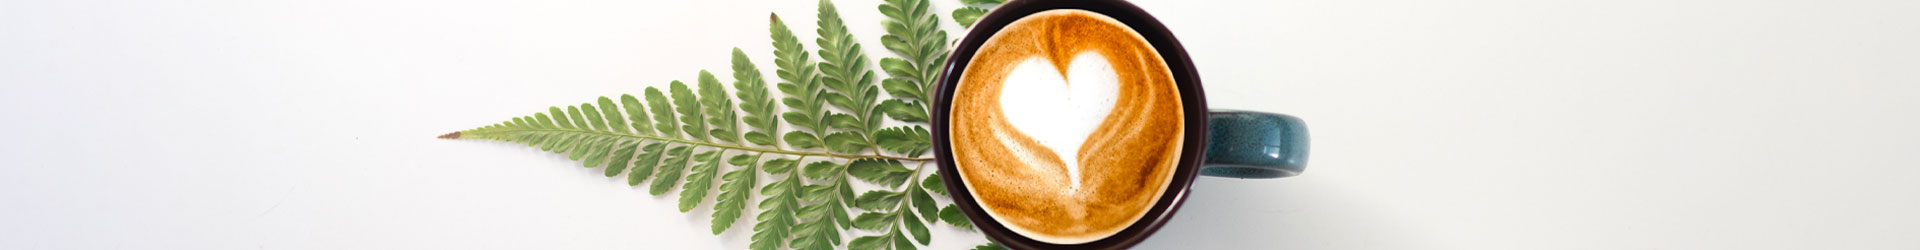 Latte-Art-Herz Cappuccino auf Farnblatt